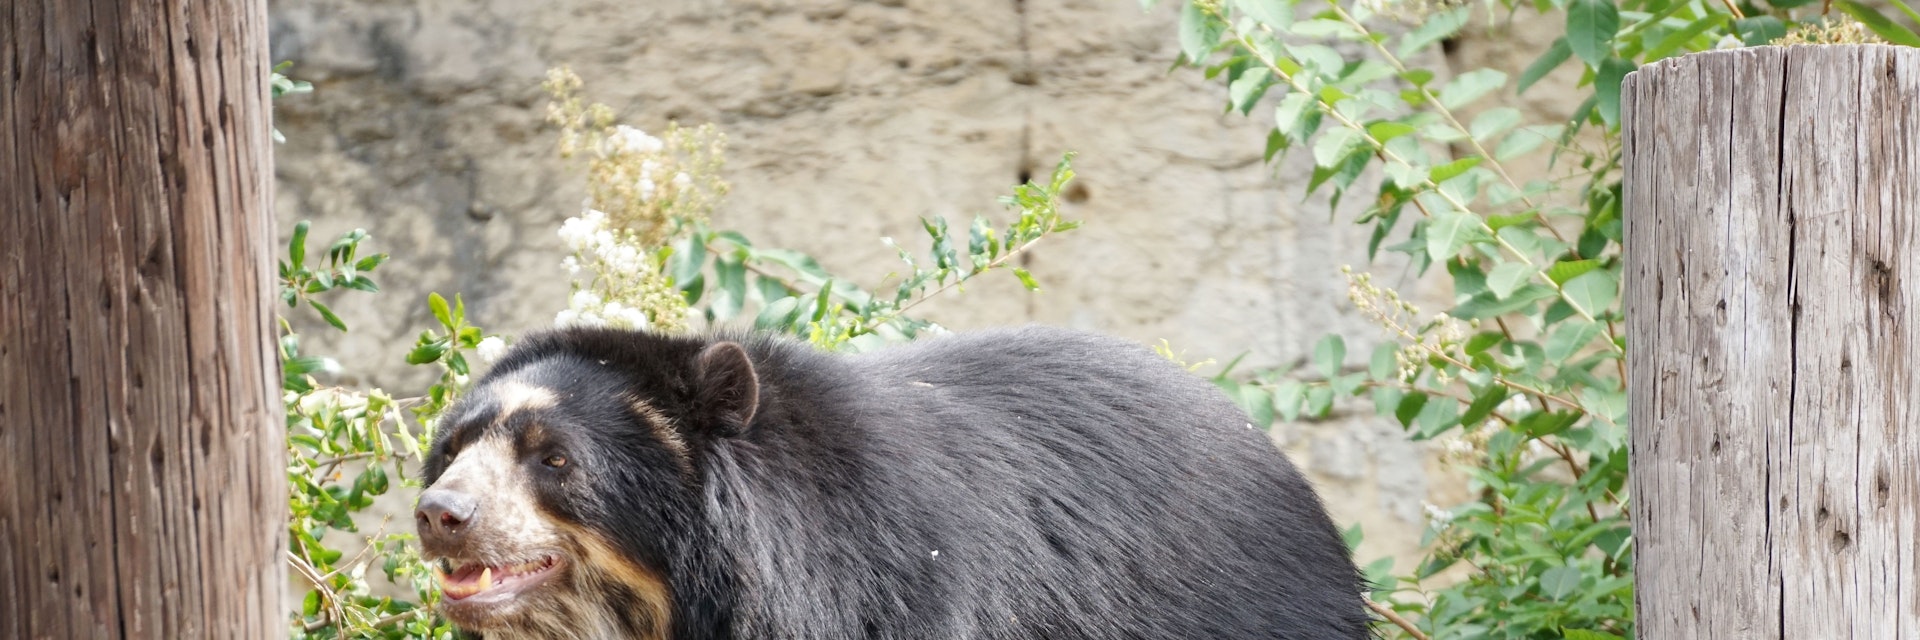 Black Bear at the San Antonio Zoo